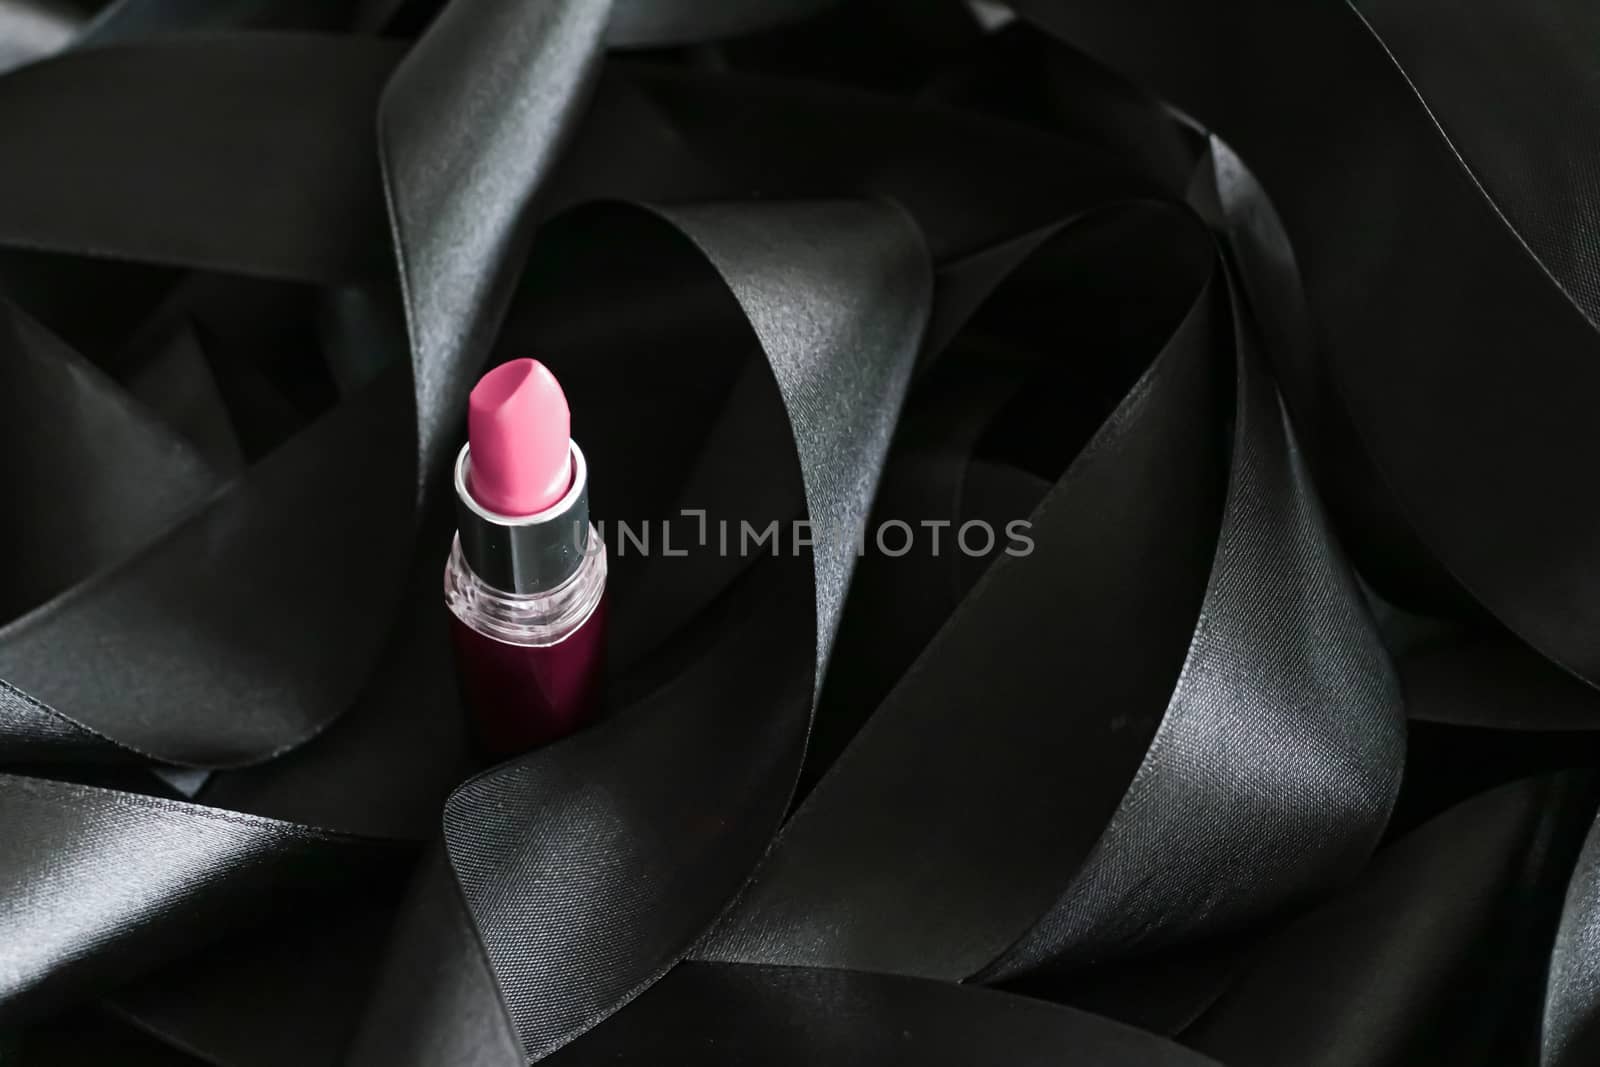 Pink lipstick on black silk background, luxury make-up and beauty cosmetics